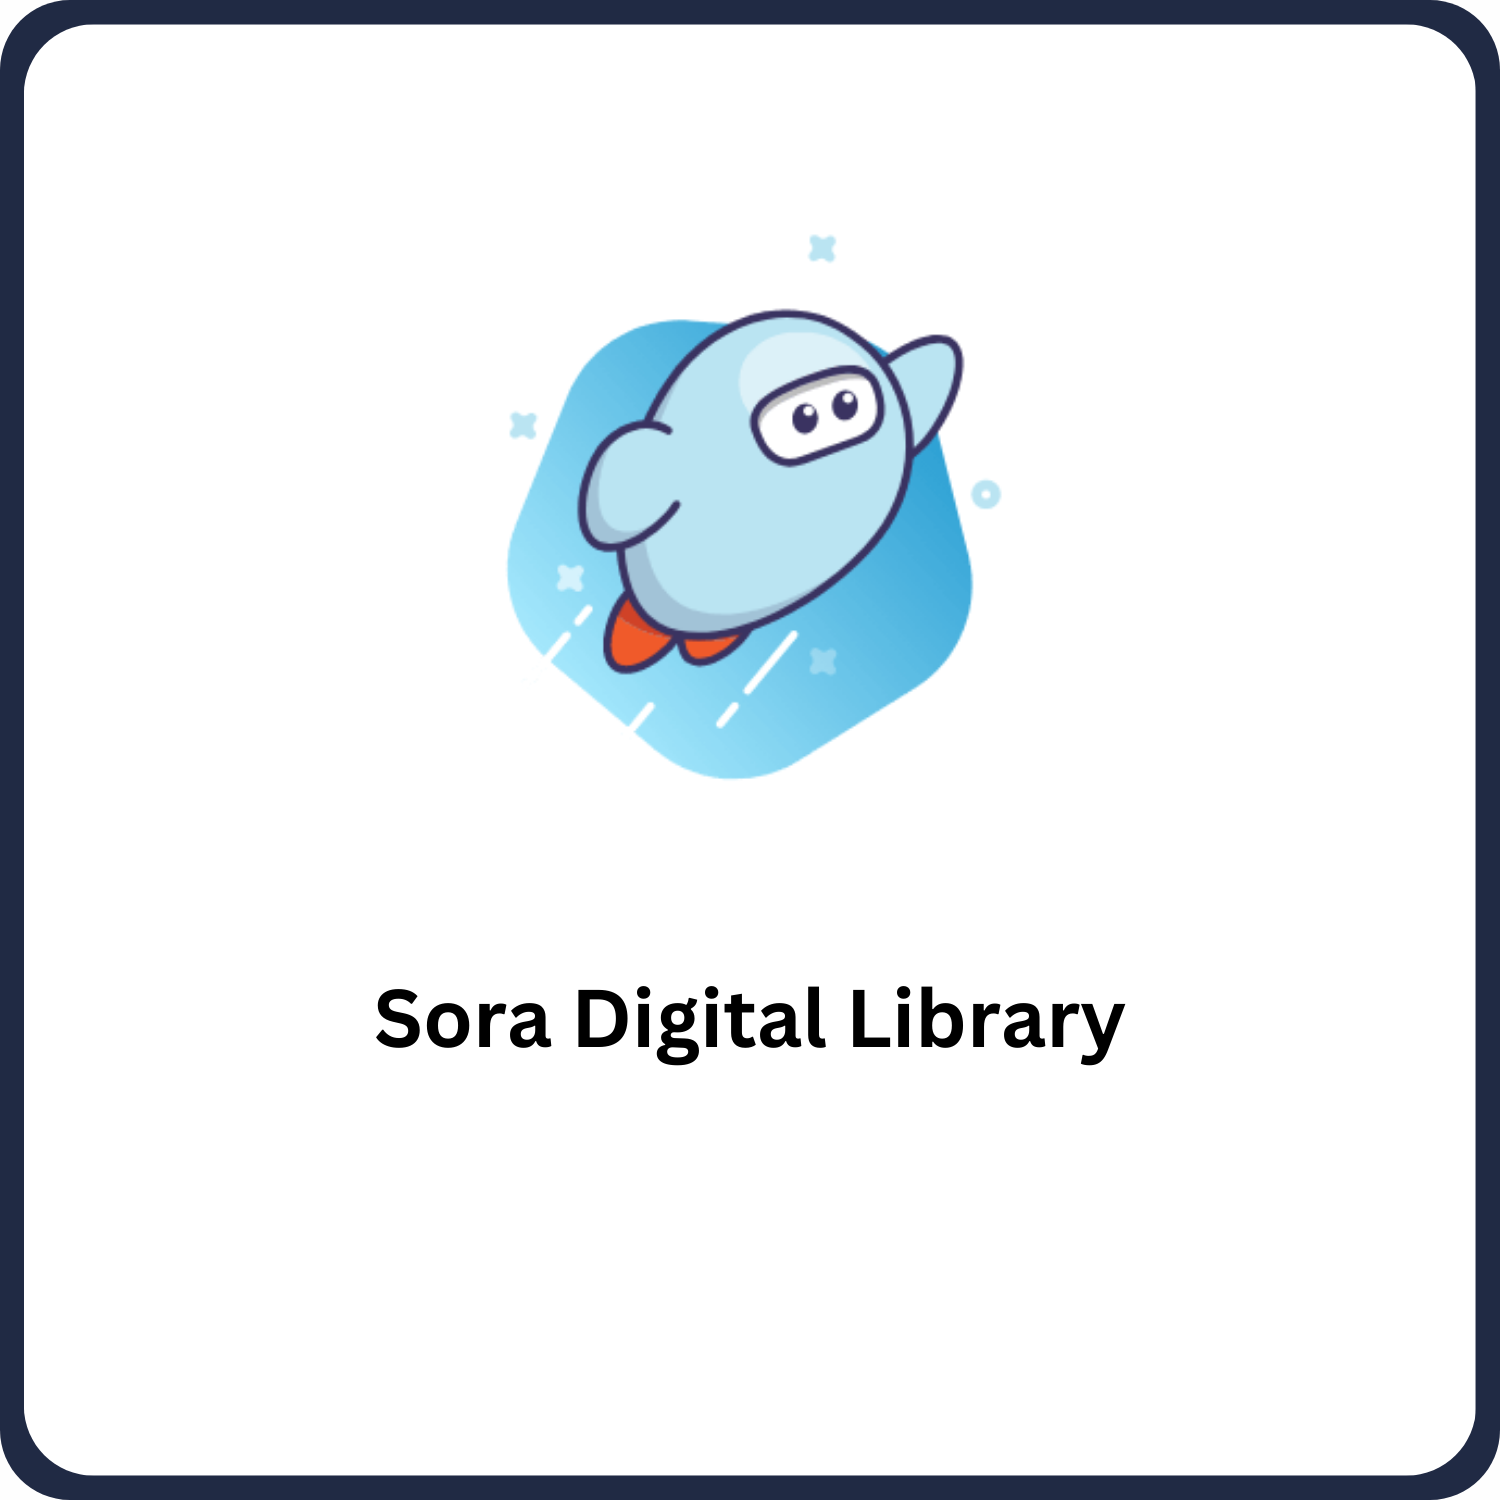 Sora Digital Library